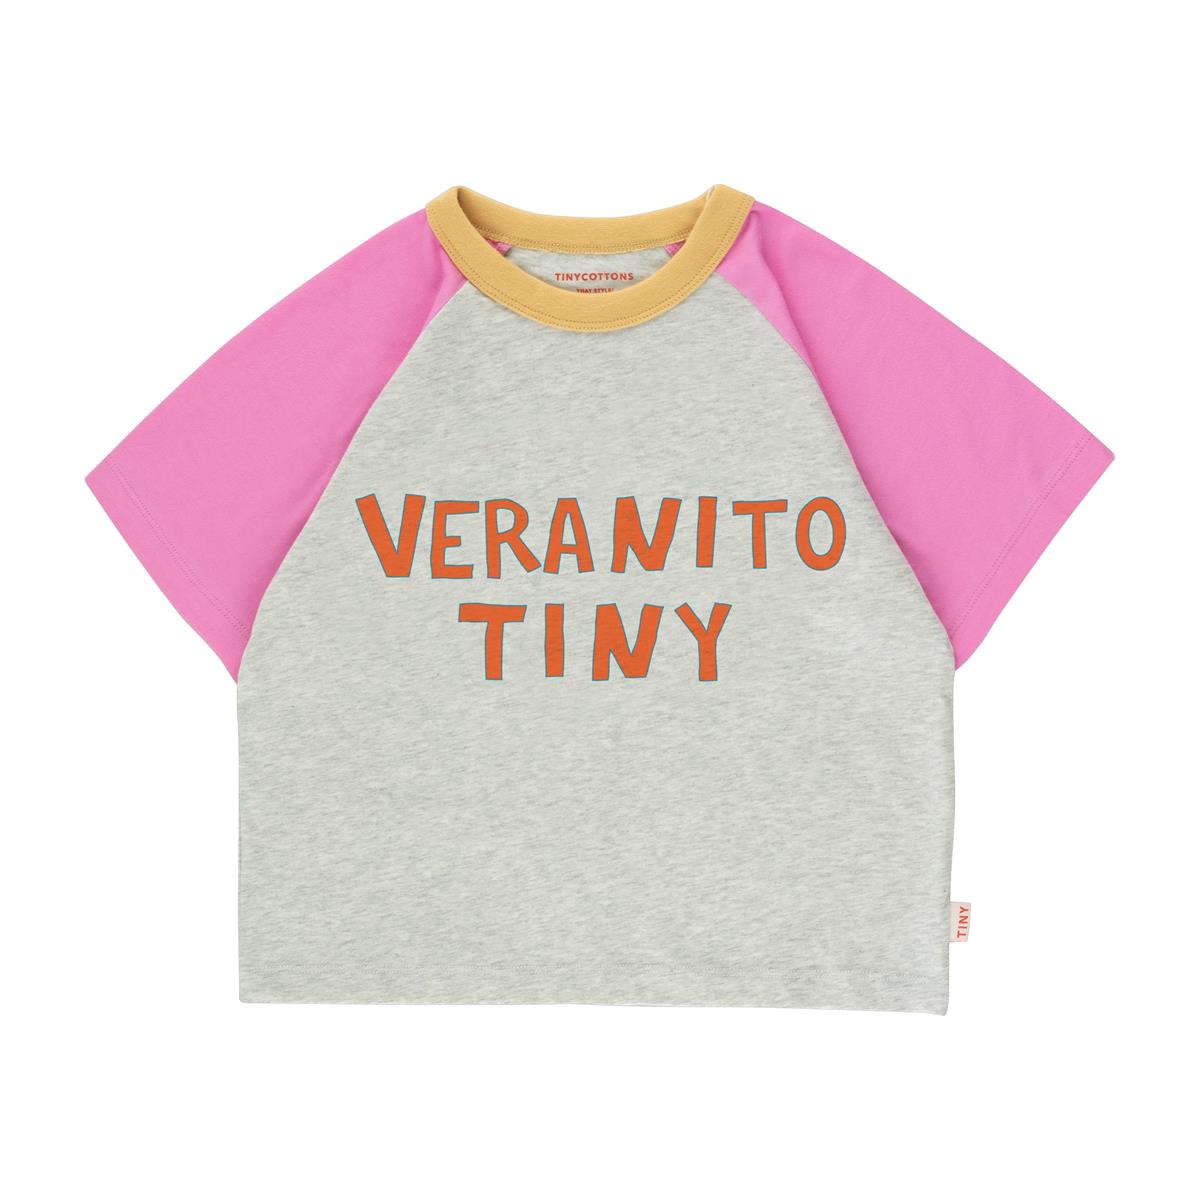 Tinycottons - Veranito Tiny color block Tee